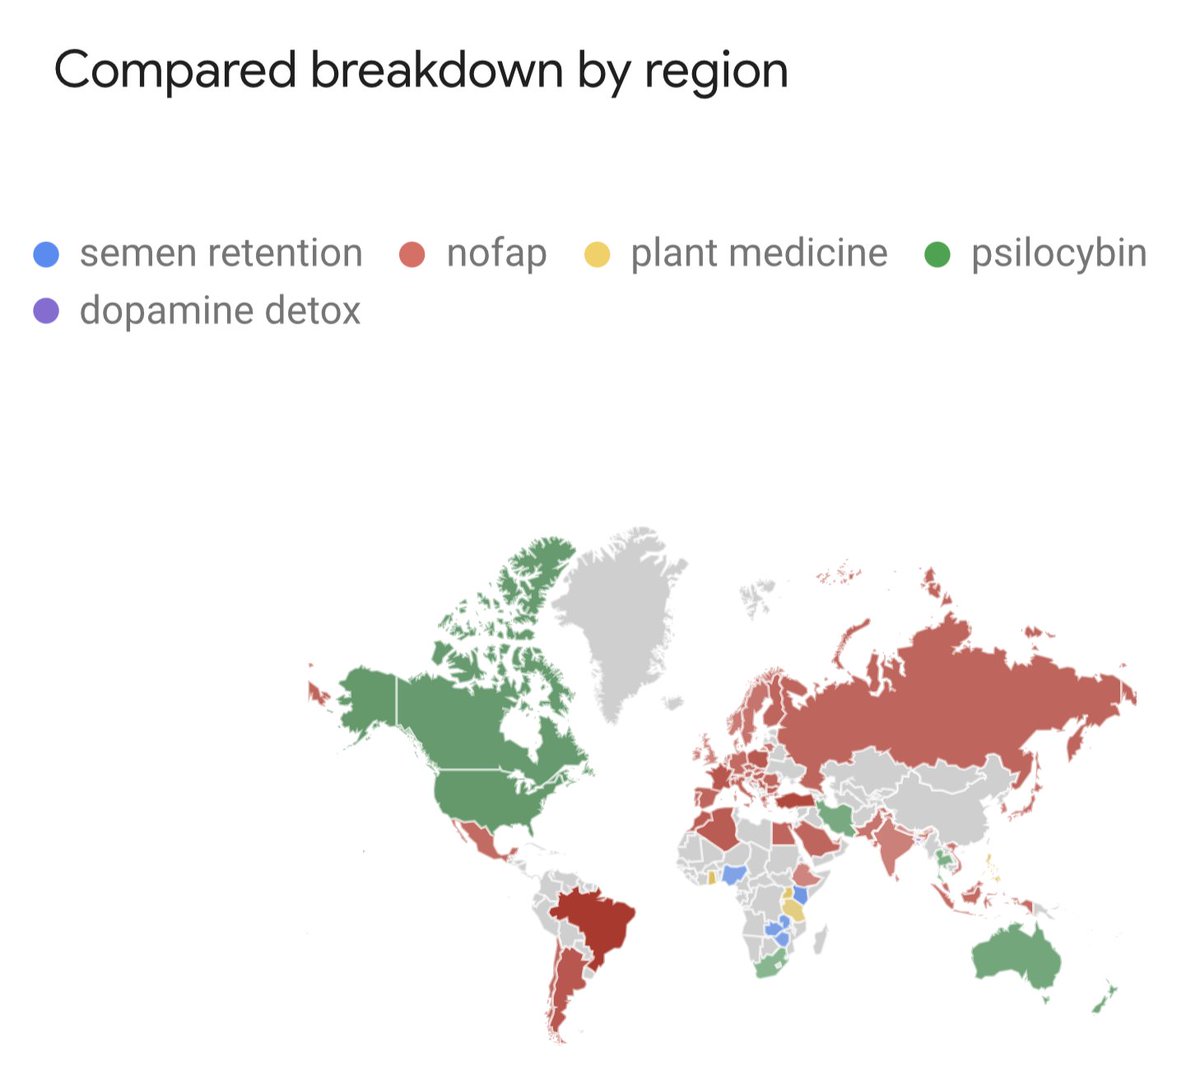 Semen retention grow 375% in last 5 years
#Google #Searchinterest for '#semenretention, #nofap, #plantmedicine, #psilocybin, #dopamindetox' 
@NiklasAnzinger 
trends.google.com/trends/explore…